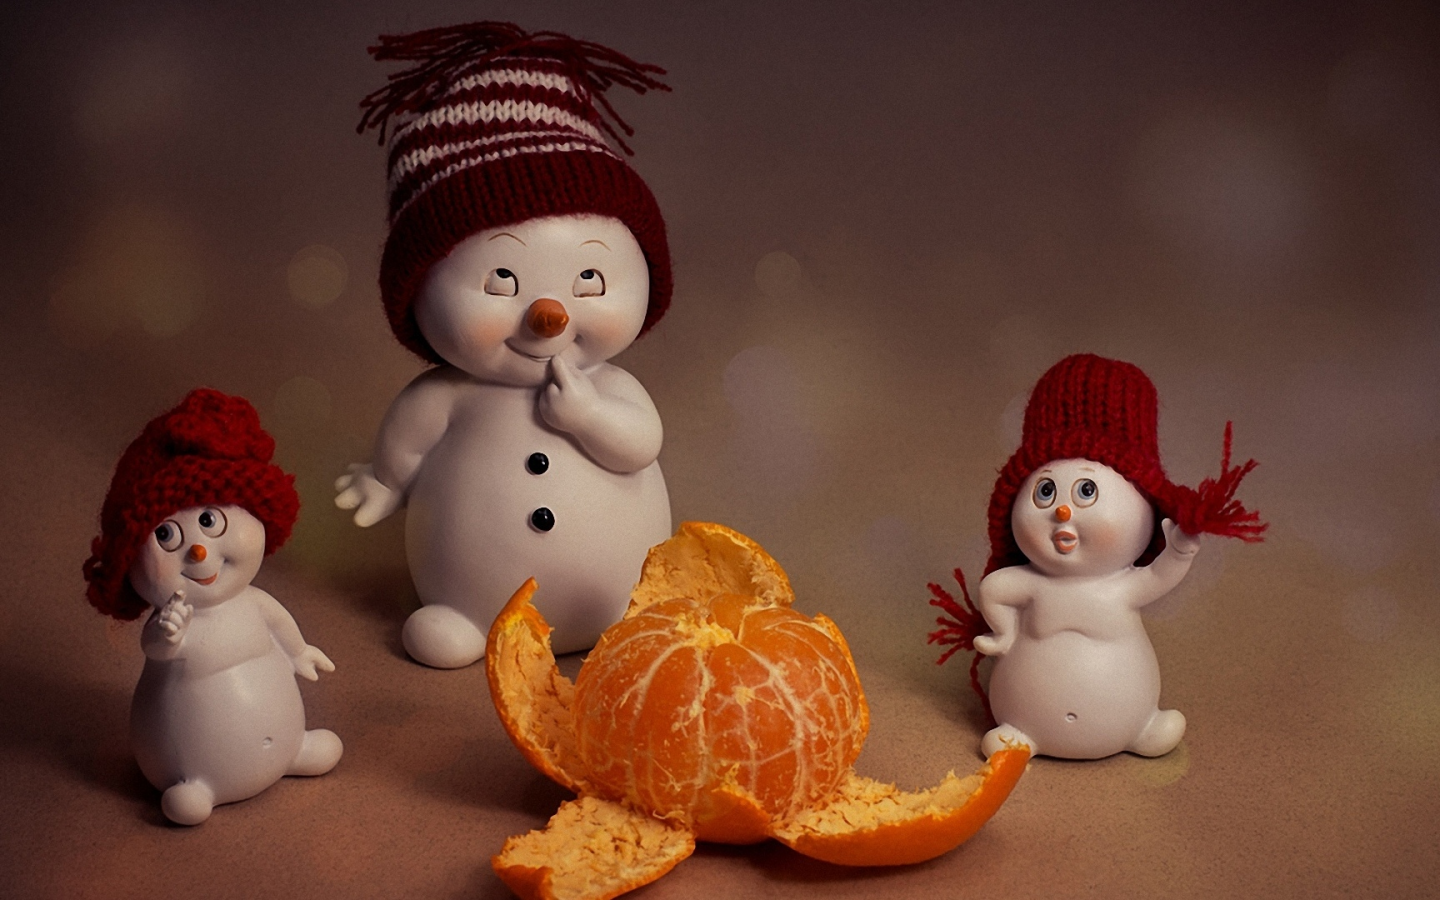 toy, snowman, tangerine